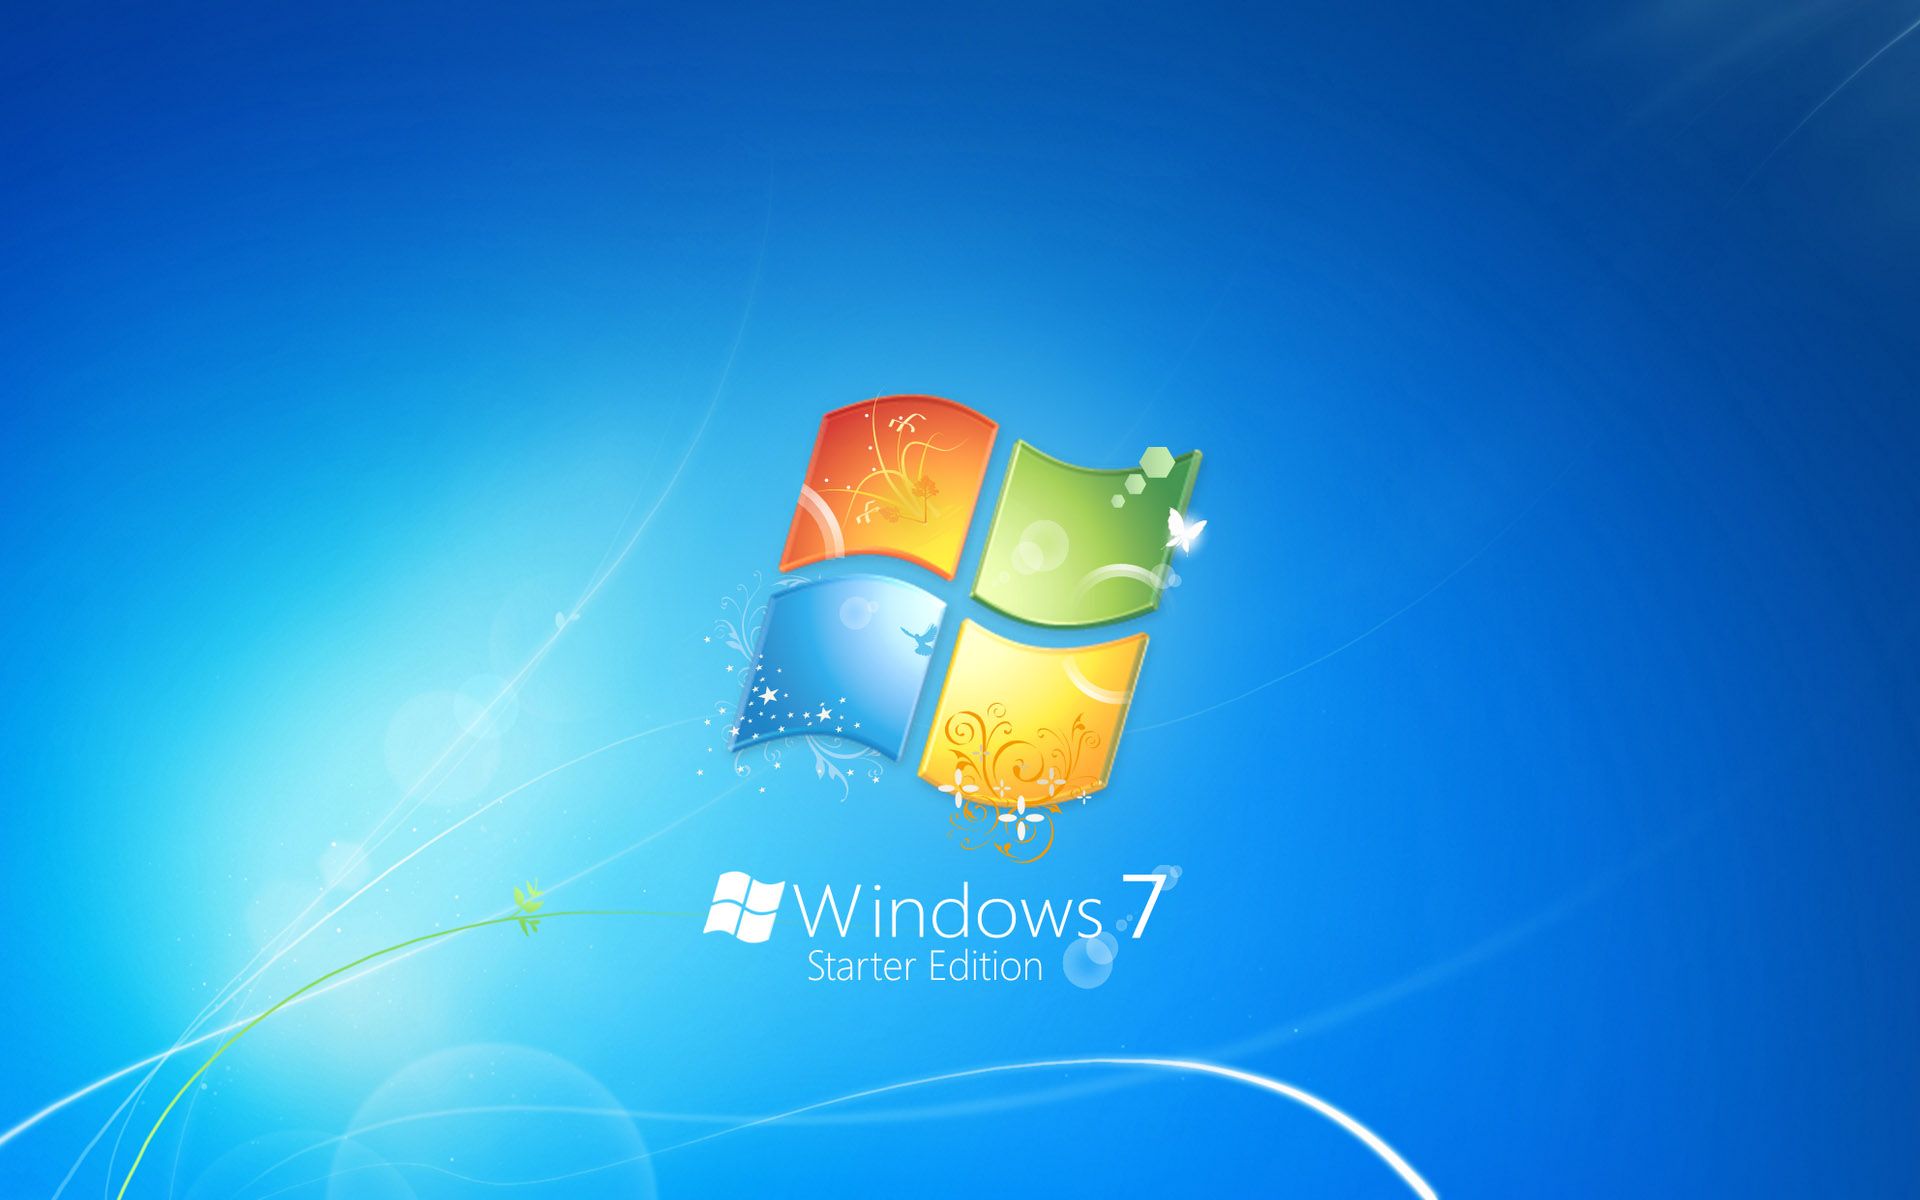 50 Windows 7 Wallpapers Free Download  WallpaperSafari